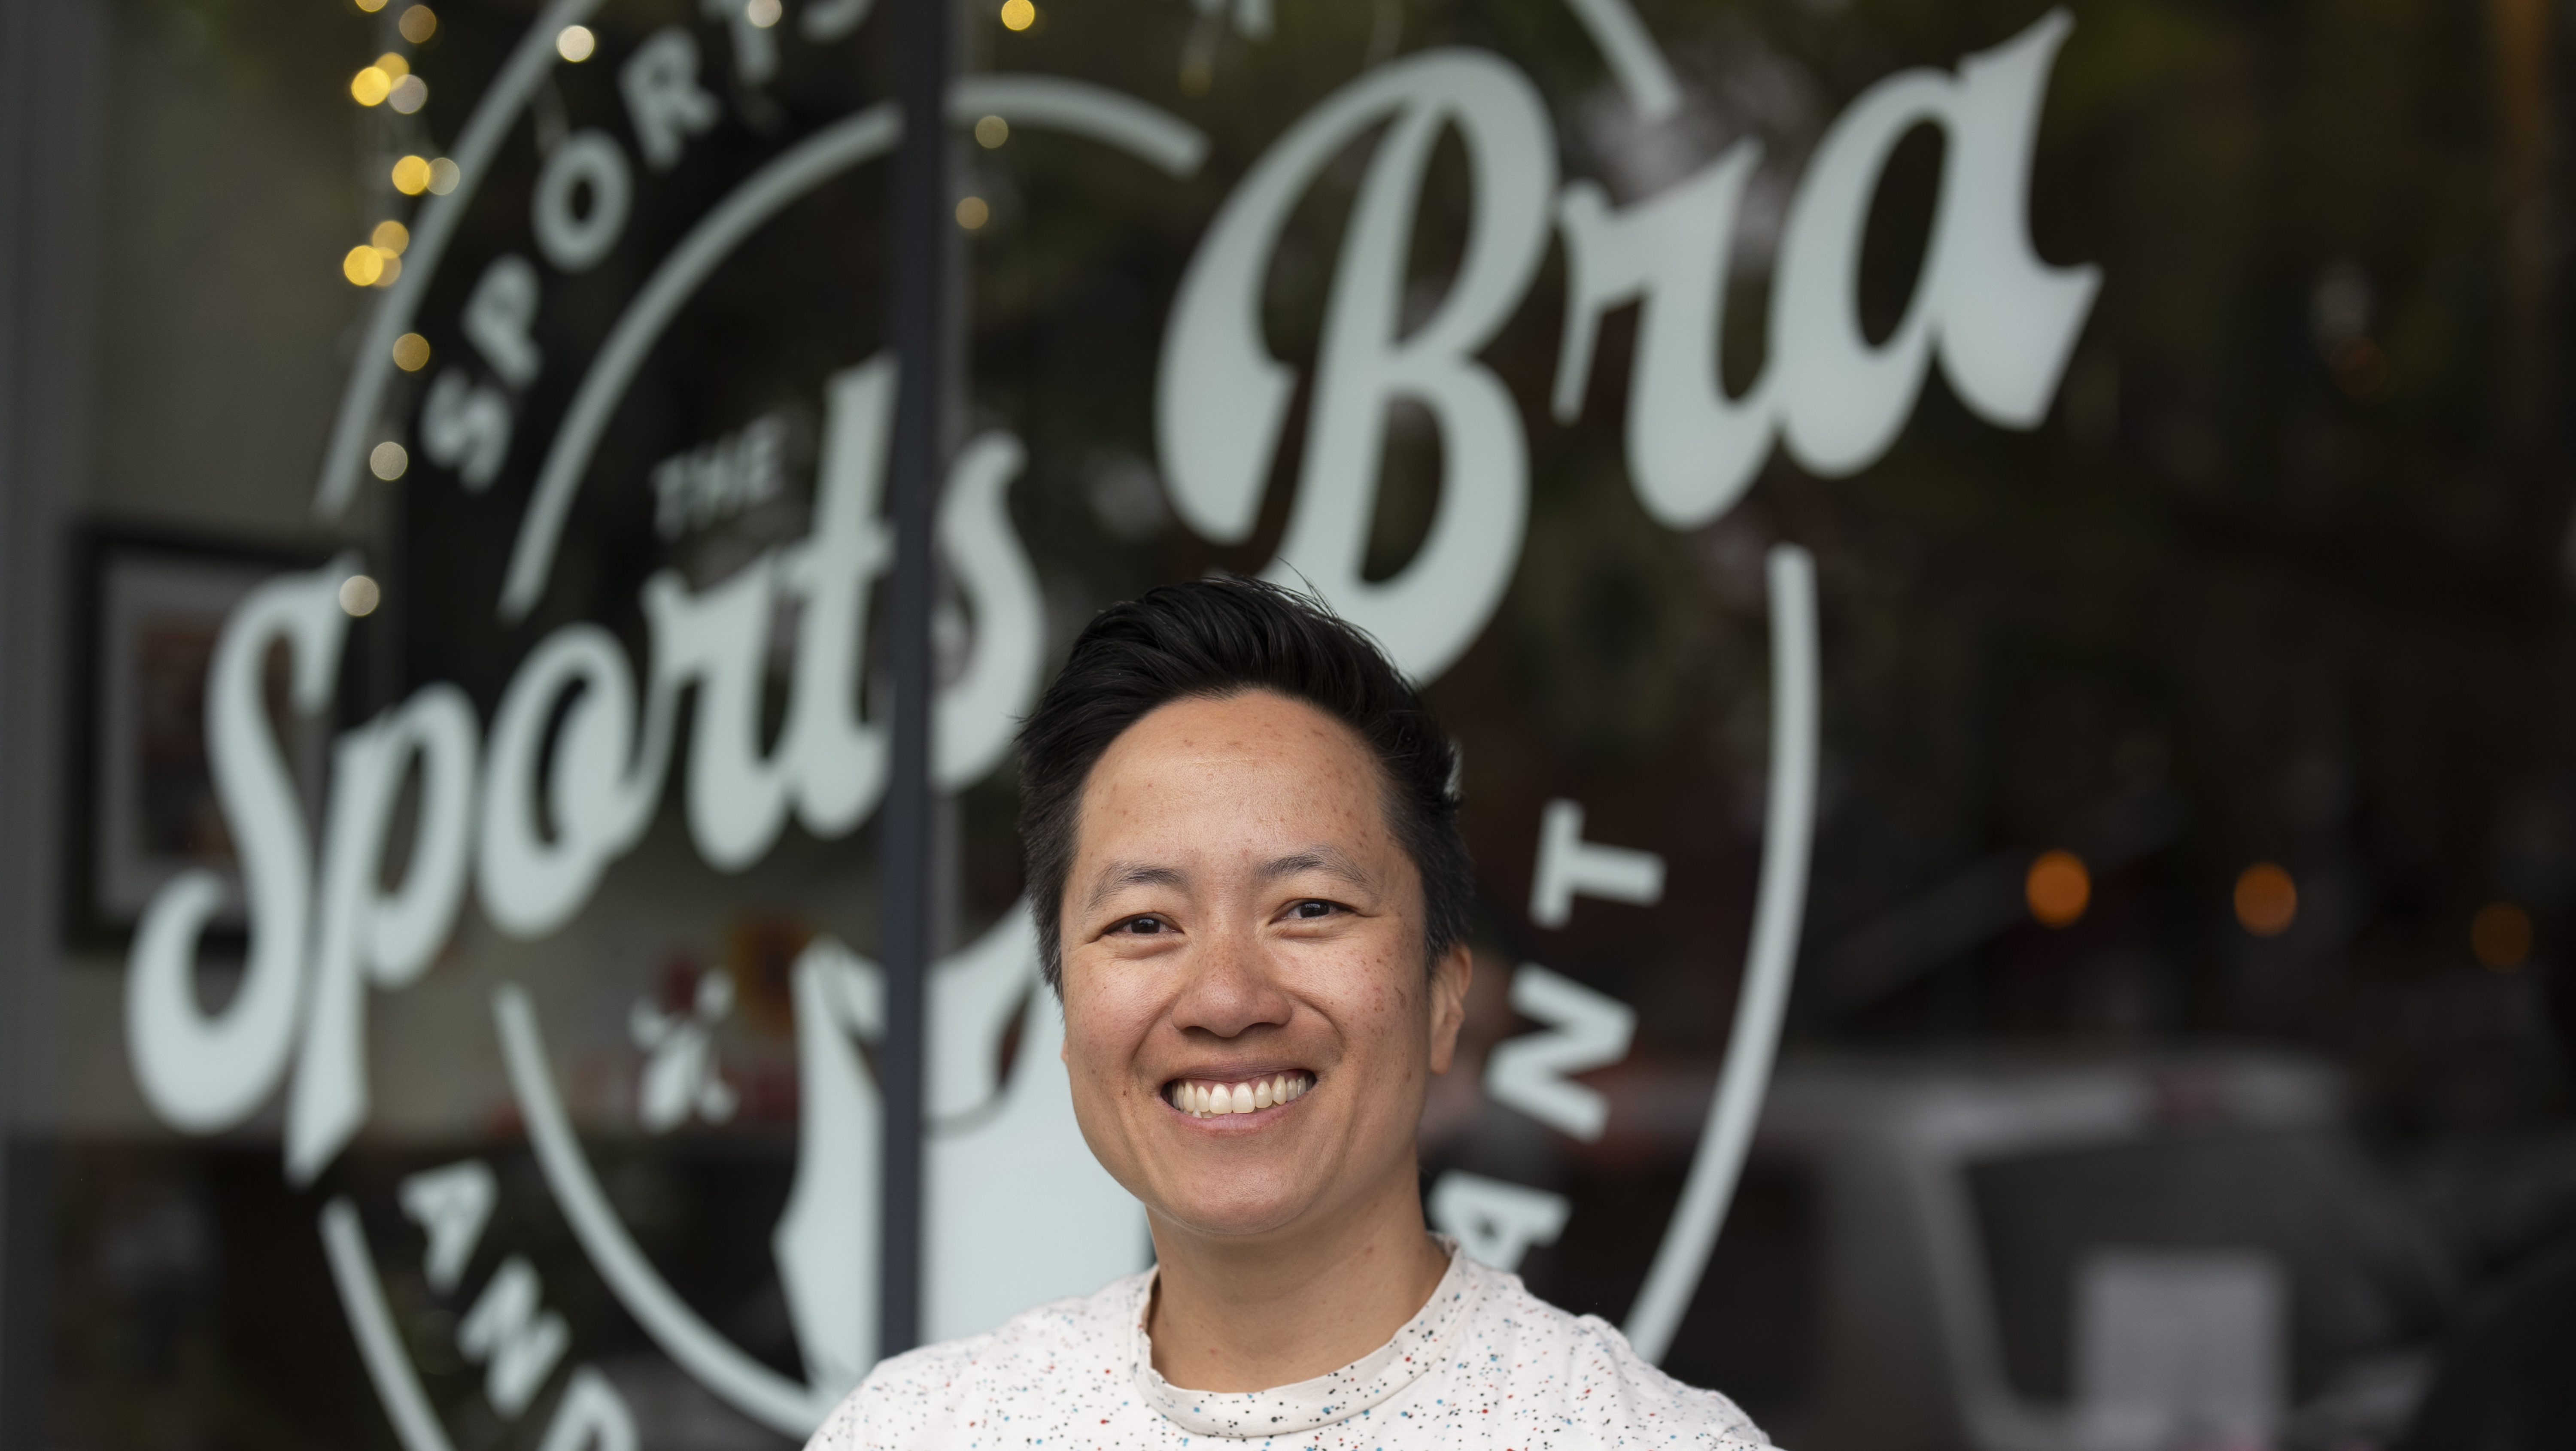 The Sports Bra founder and CEO Jenny Nguyen